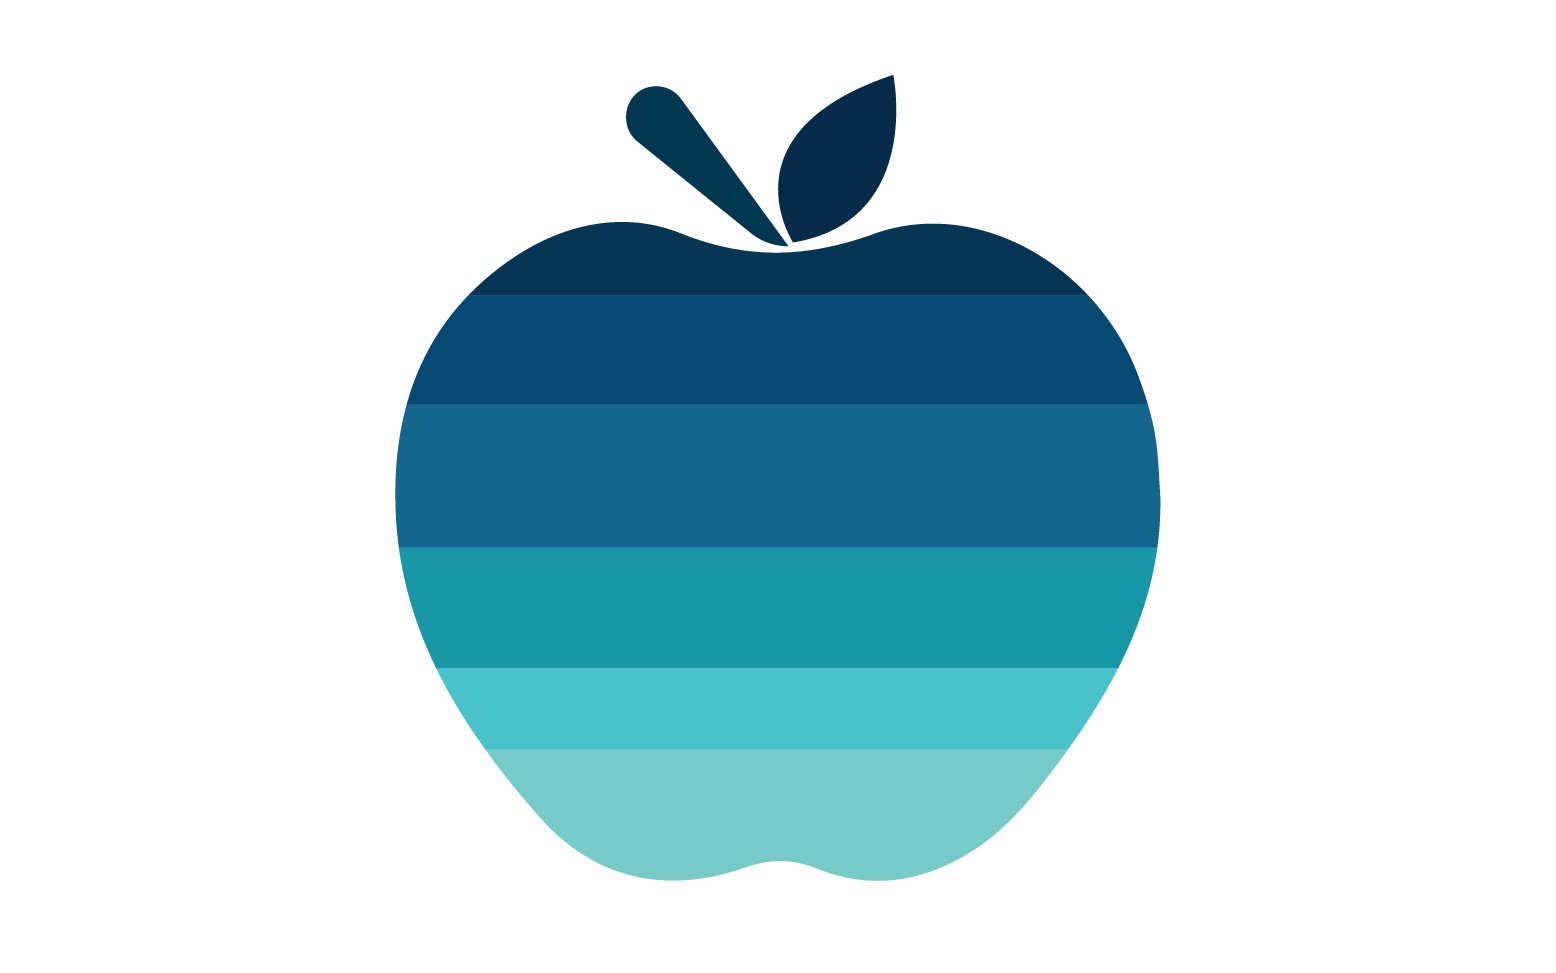 Apple fruits icon logo template version 44